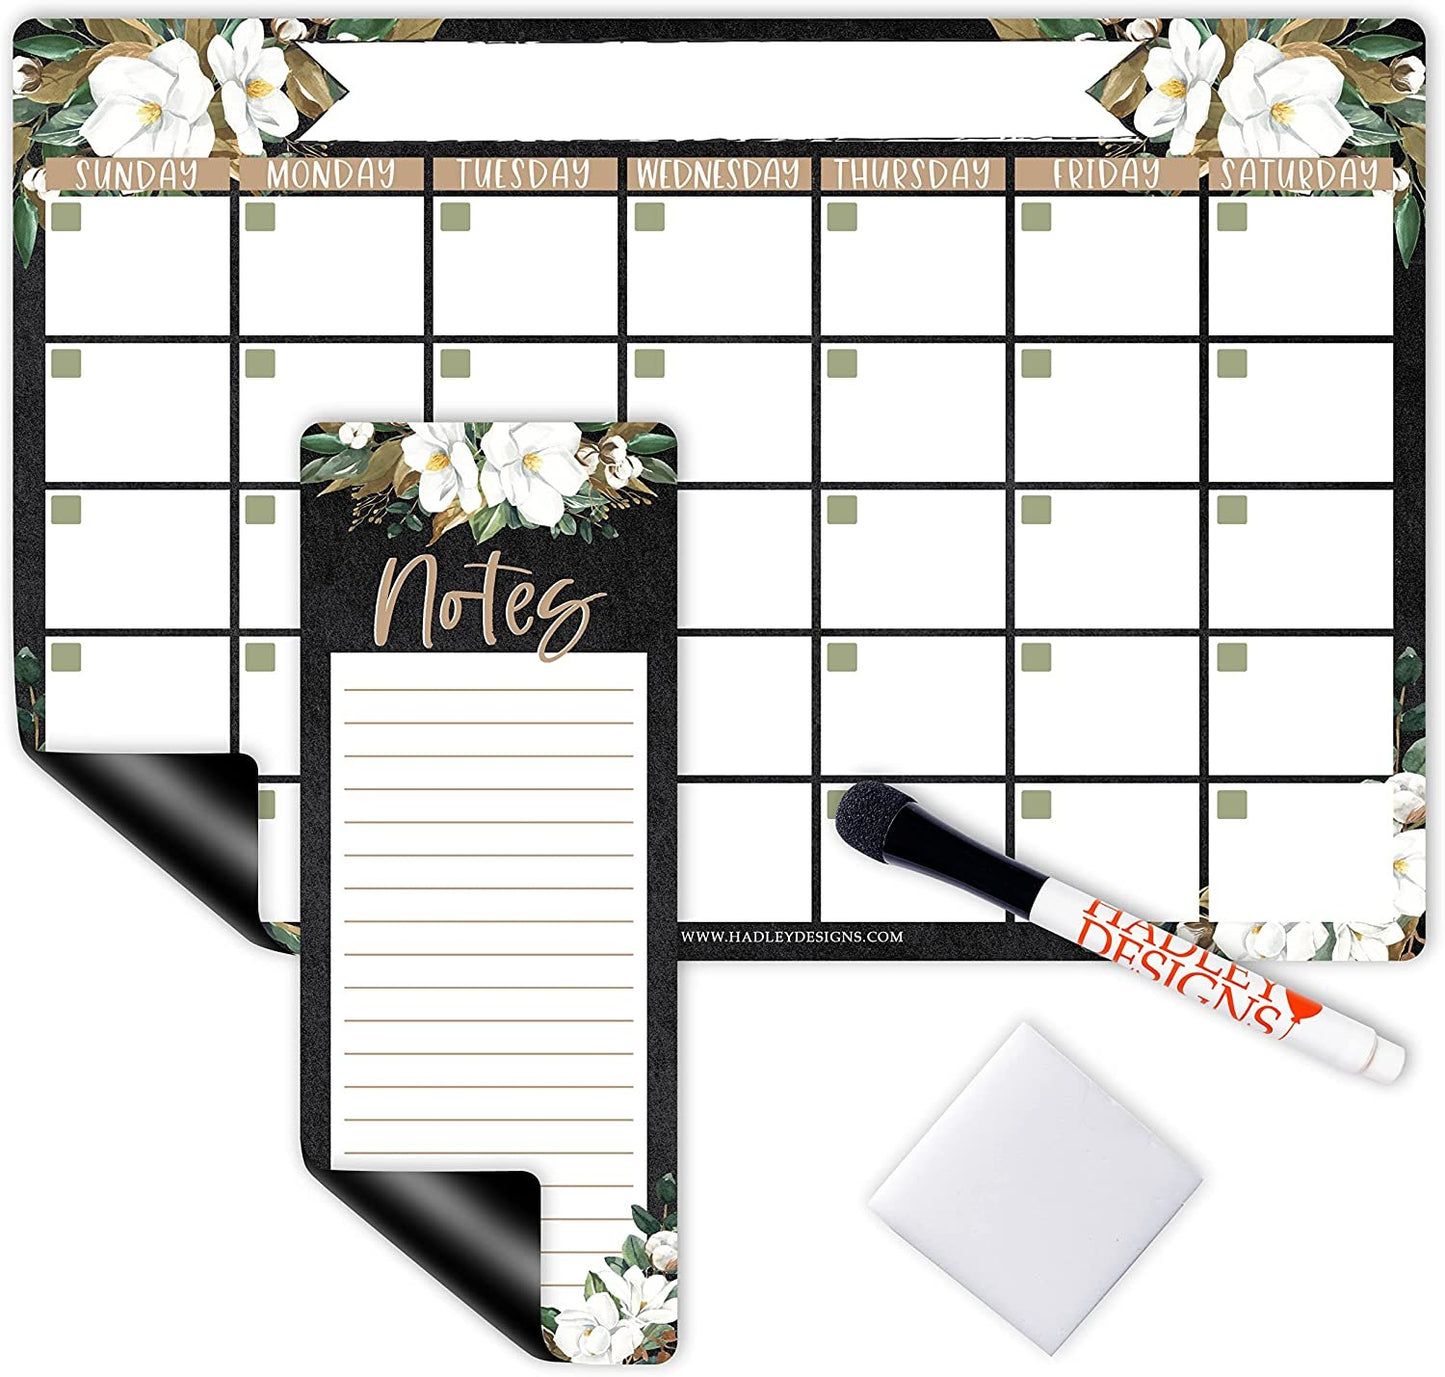 Magnolia Fridge Calendar | Dry Erase | Monthly Magnetic Calendar